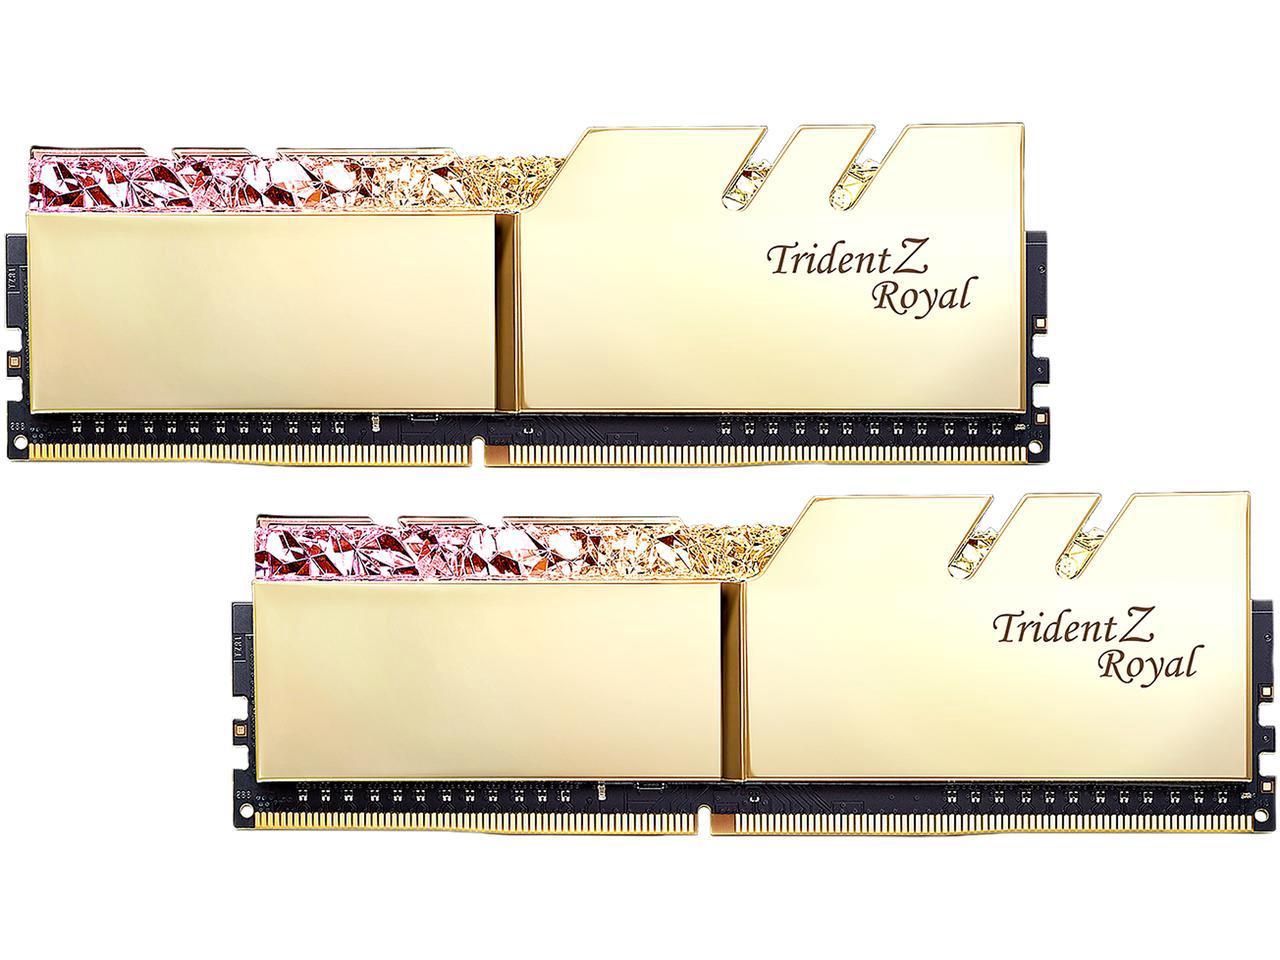 G Skill Trident Z Royal Series DDR4 32GB (2 x 16GB) 3600MHz